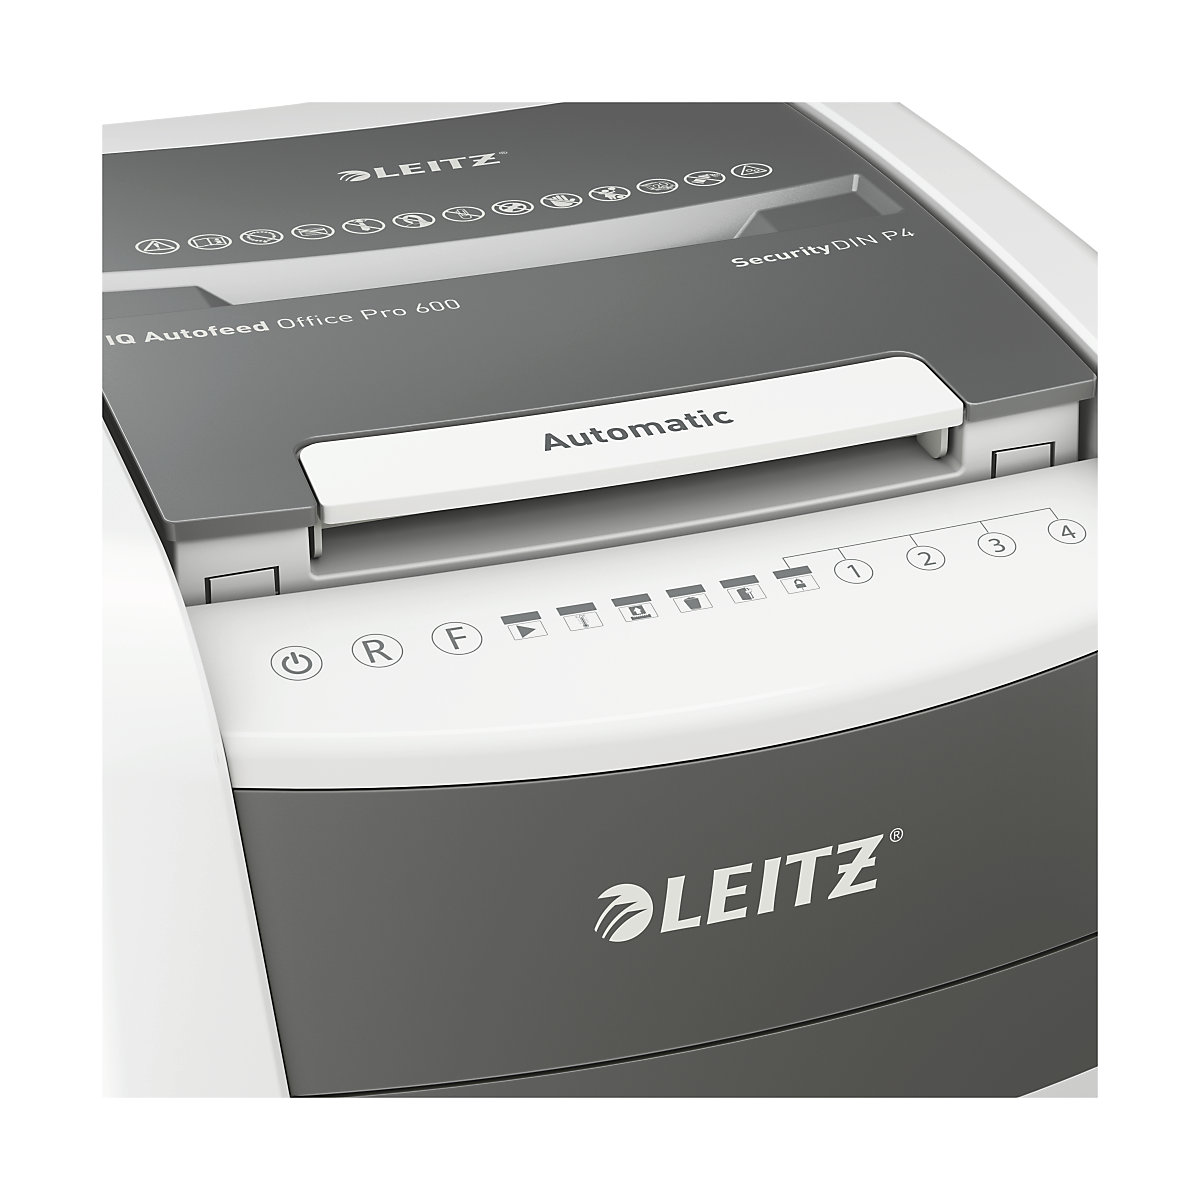 Skartovačka IQ Autofeed Office 600 – Leitz (Obrázek výrobku 10)-9